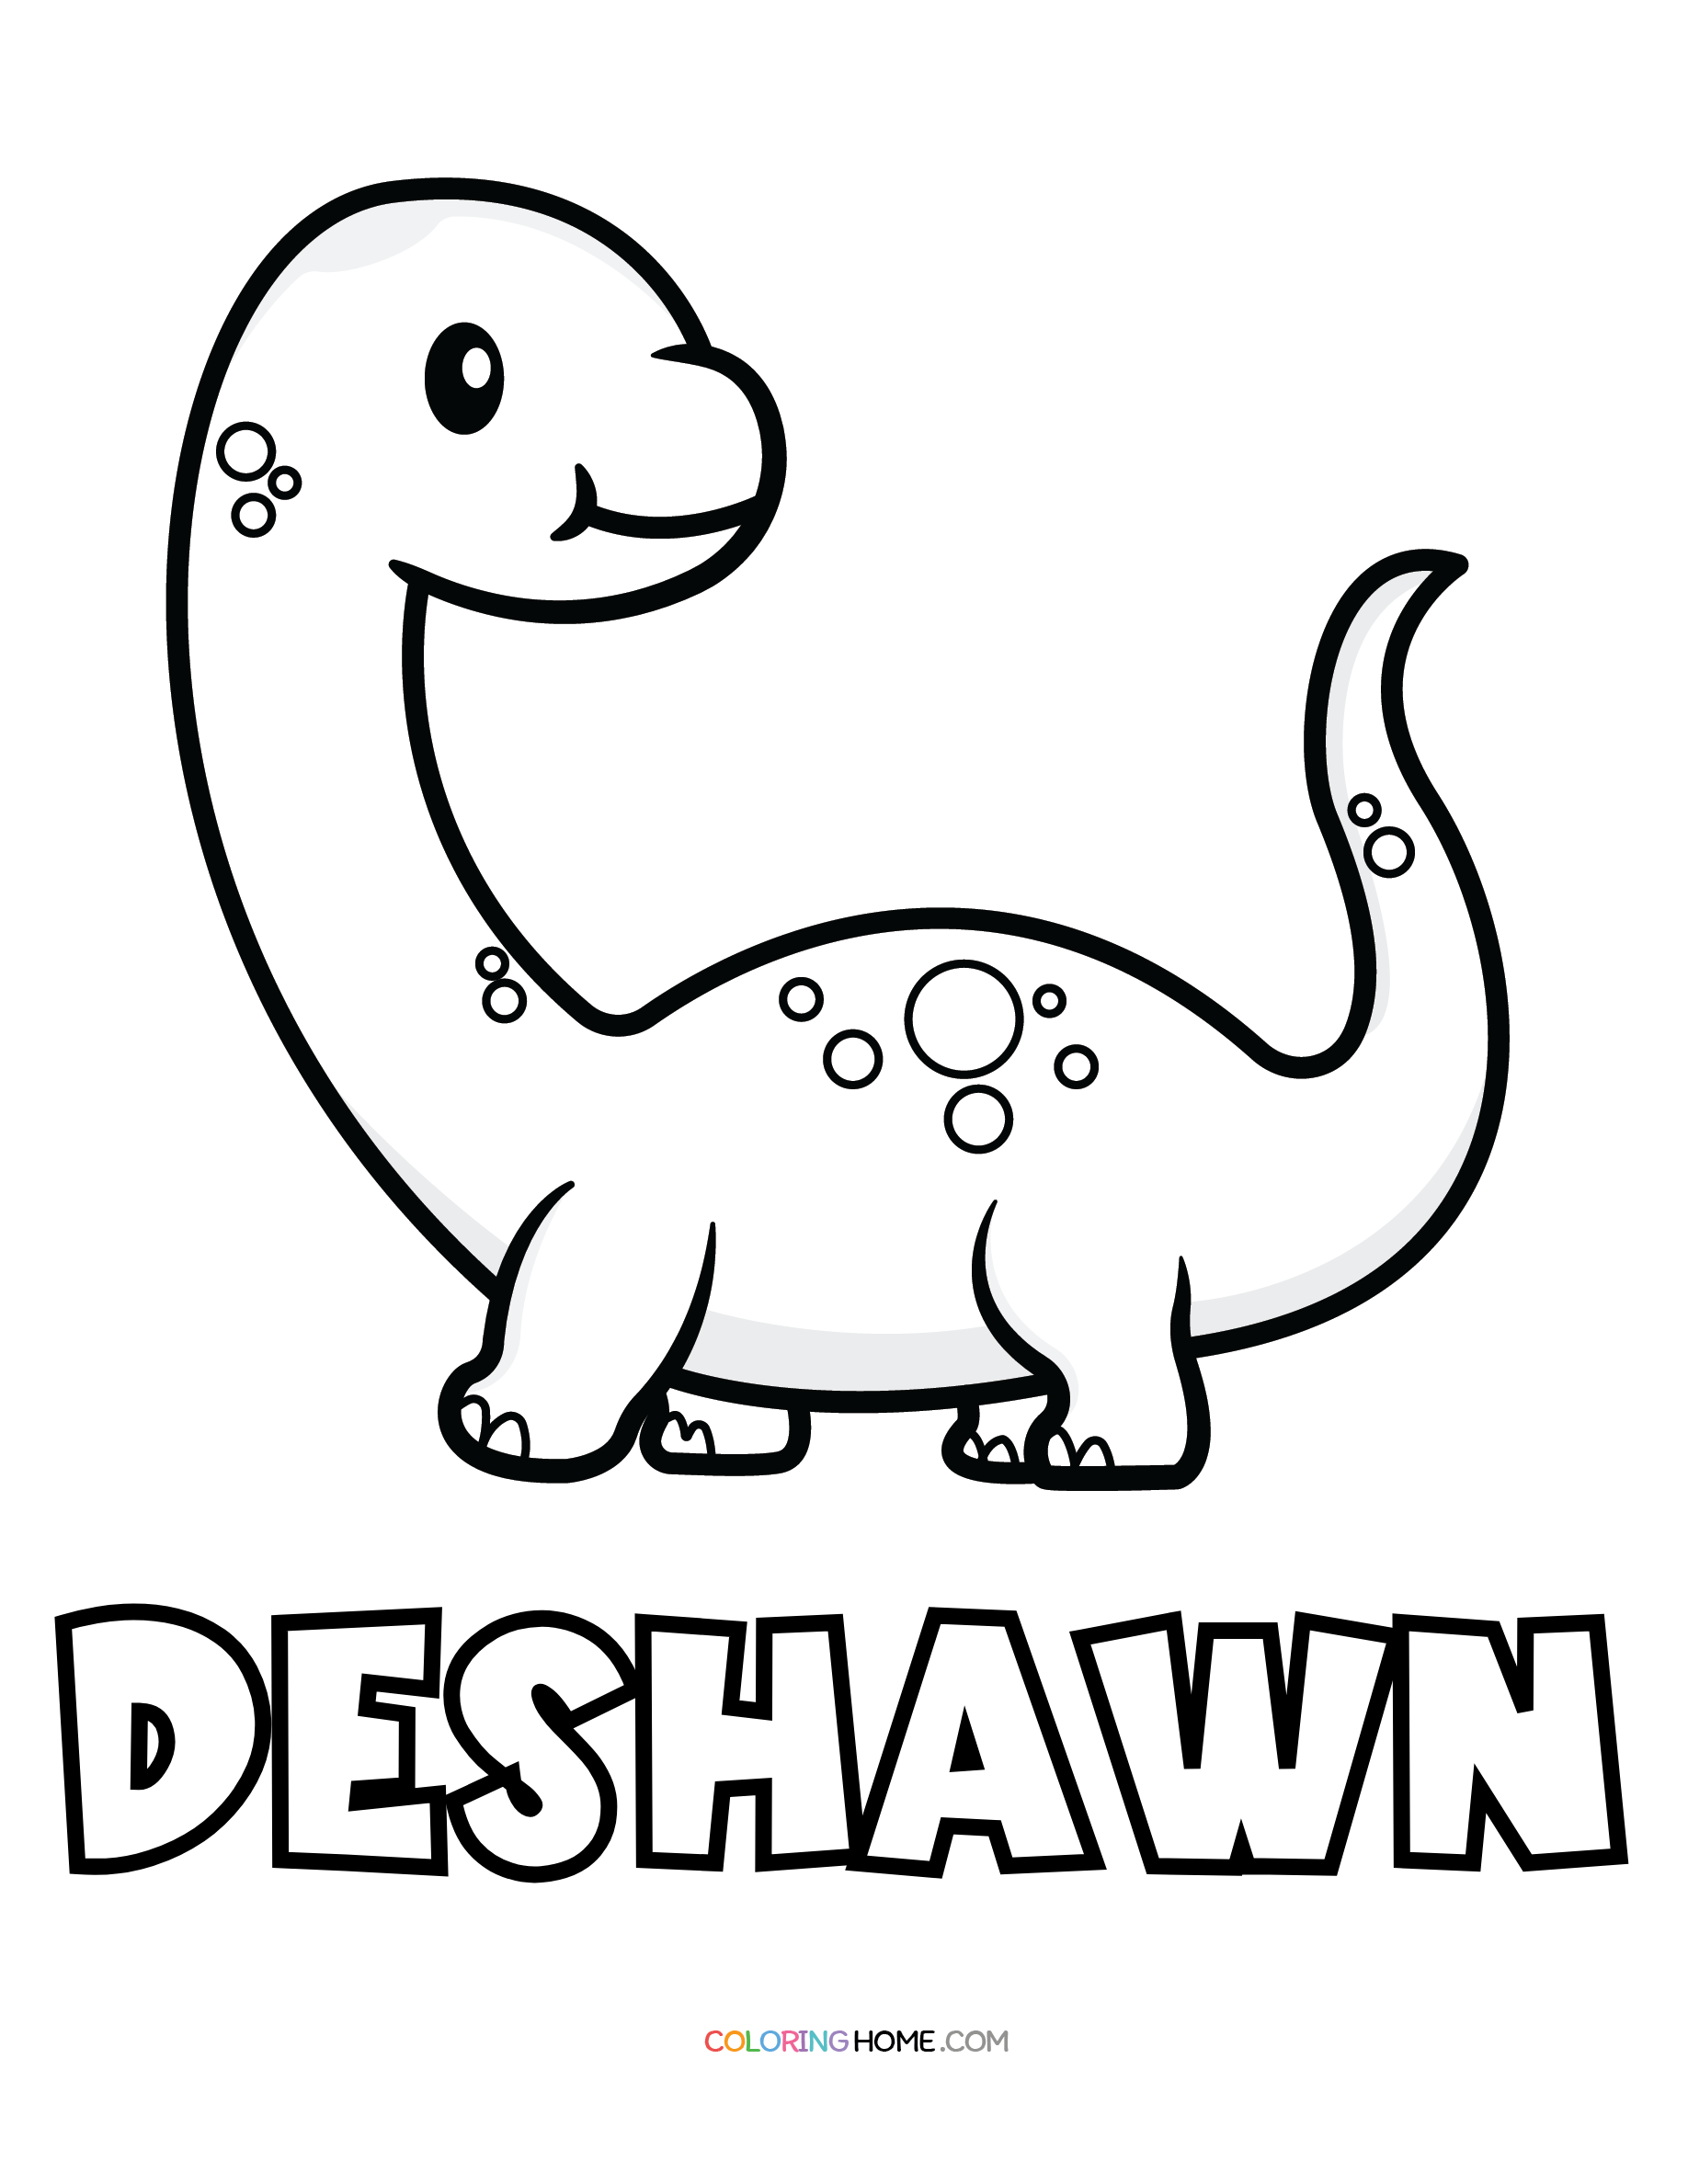 Deshawn dinosaur coloring page